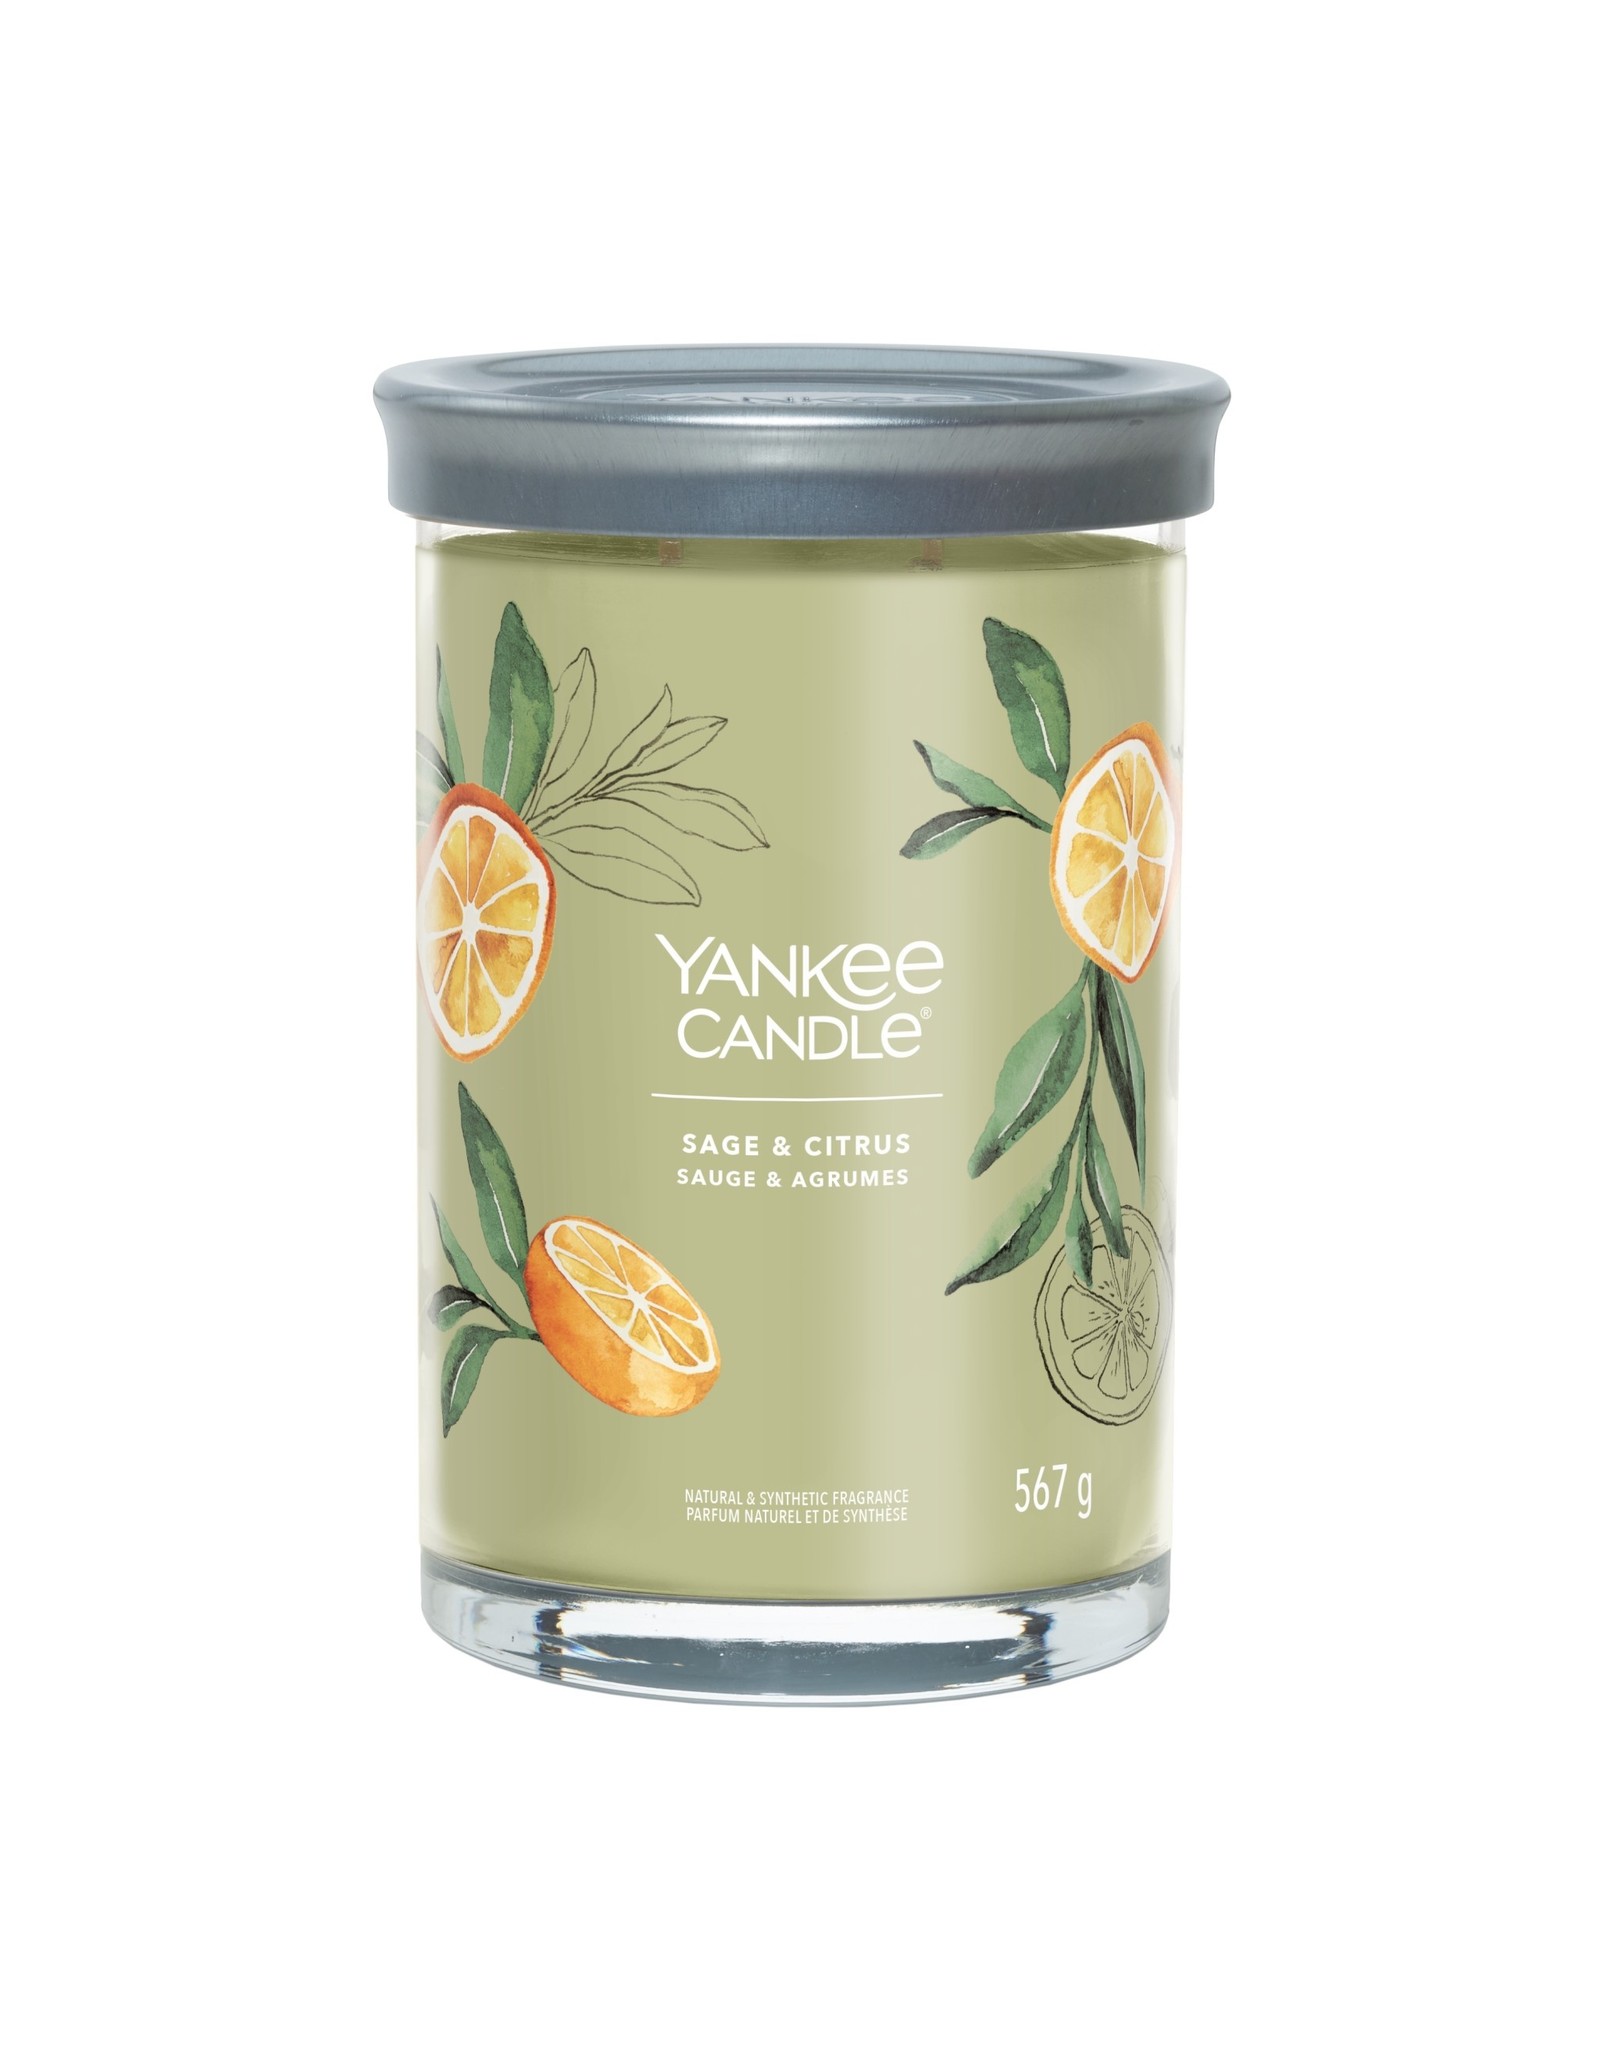 Yankee Candle Sage & Citrus - Signature Large Tumbler